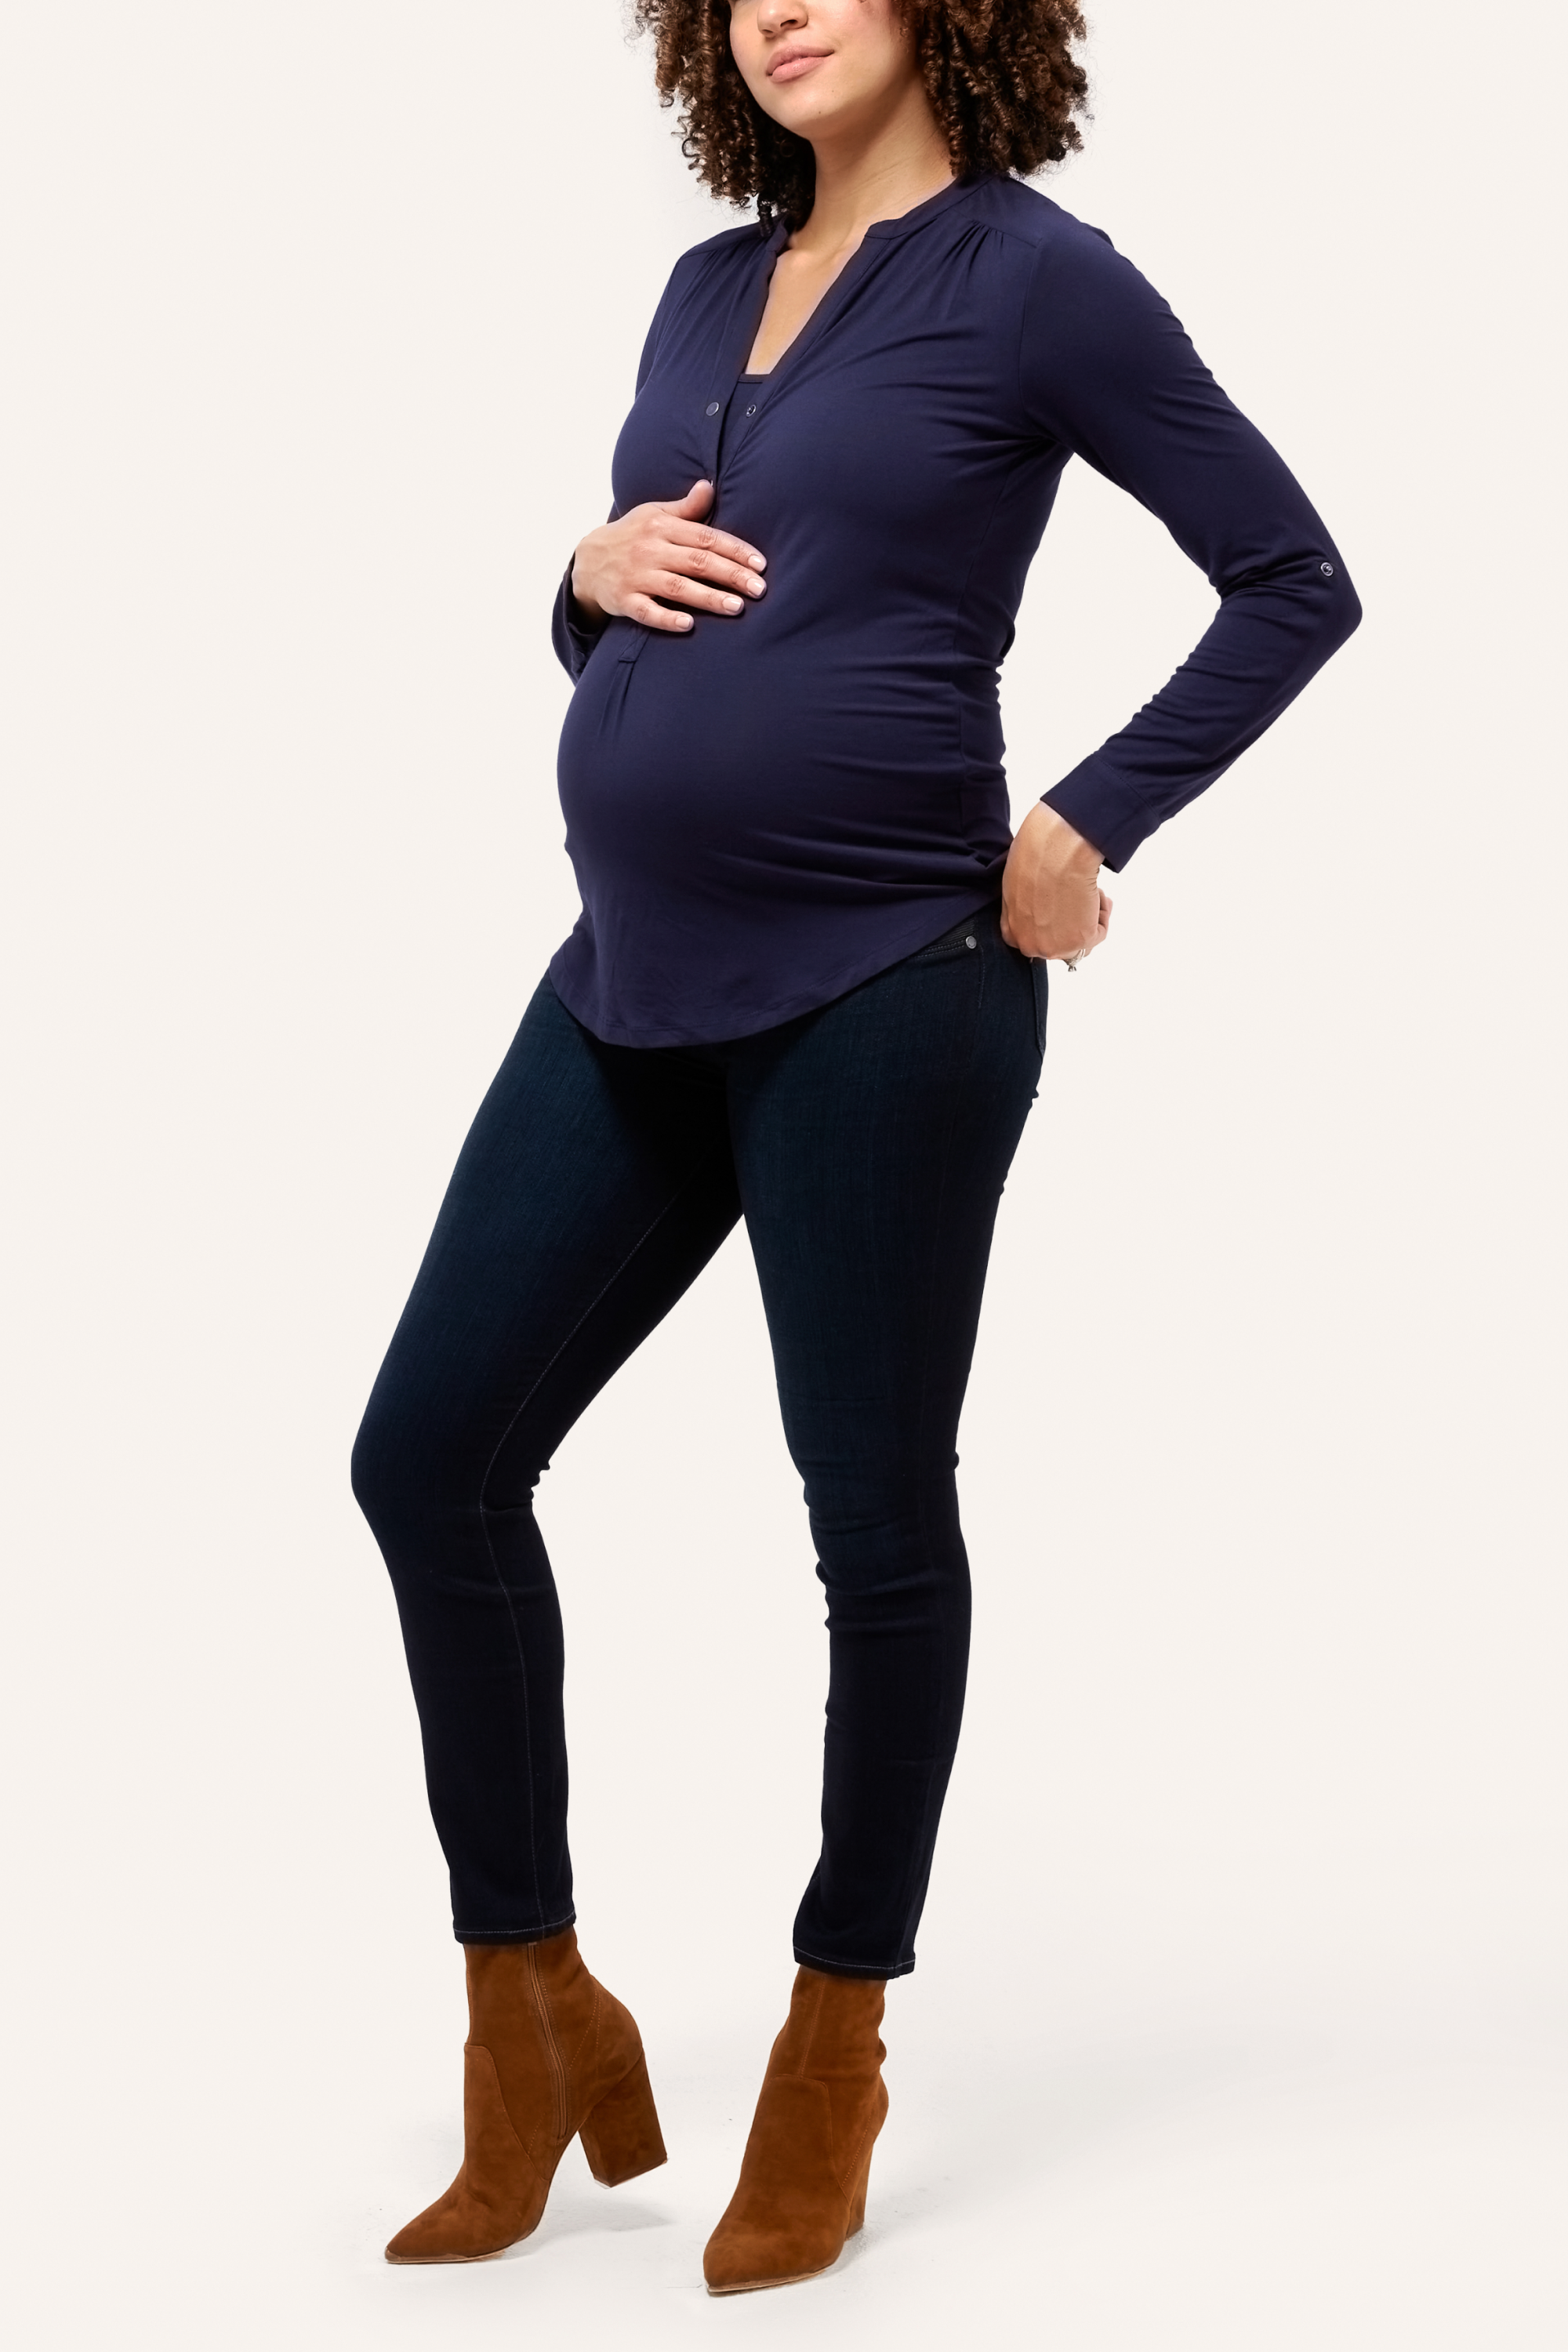 Amelie Maternity + Nursing Tops